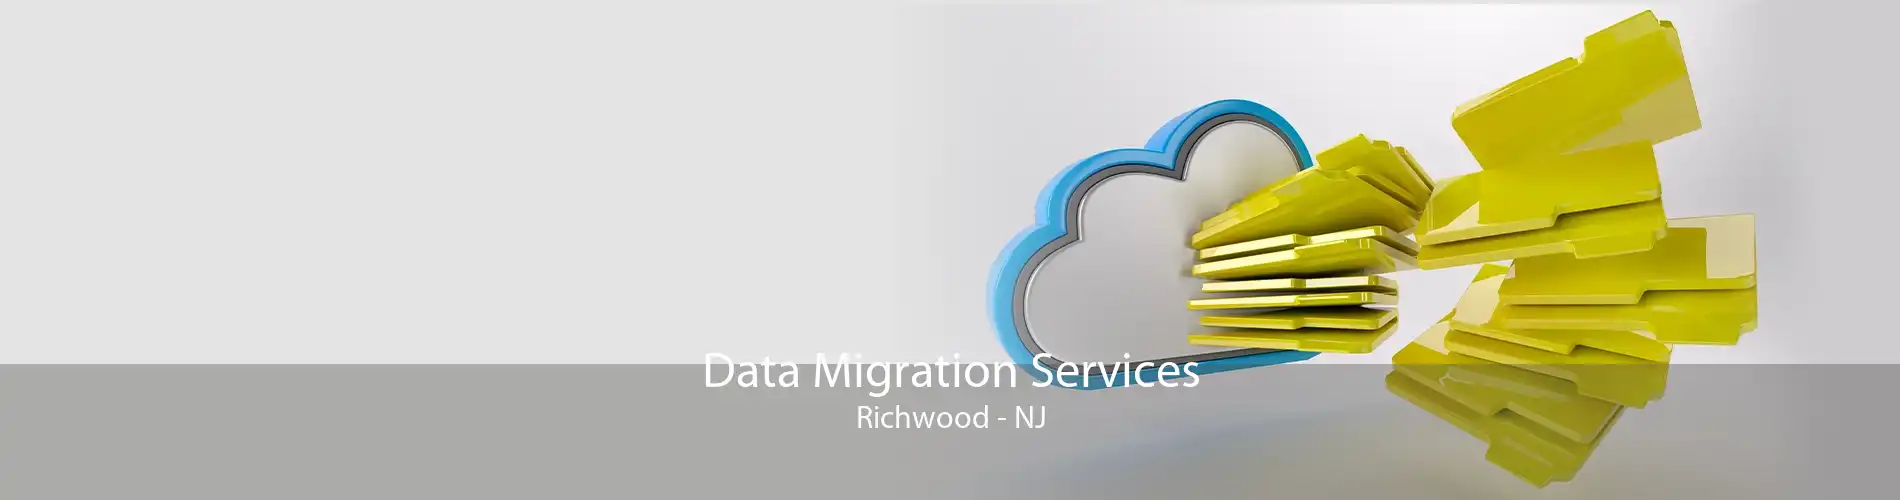 Data Migration Services Richwood - NJ